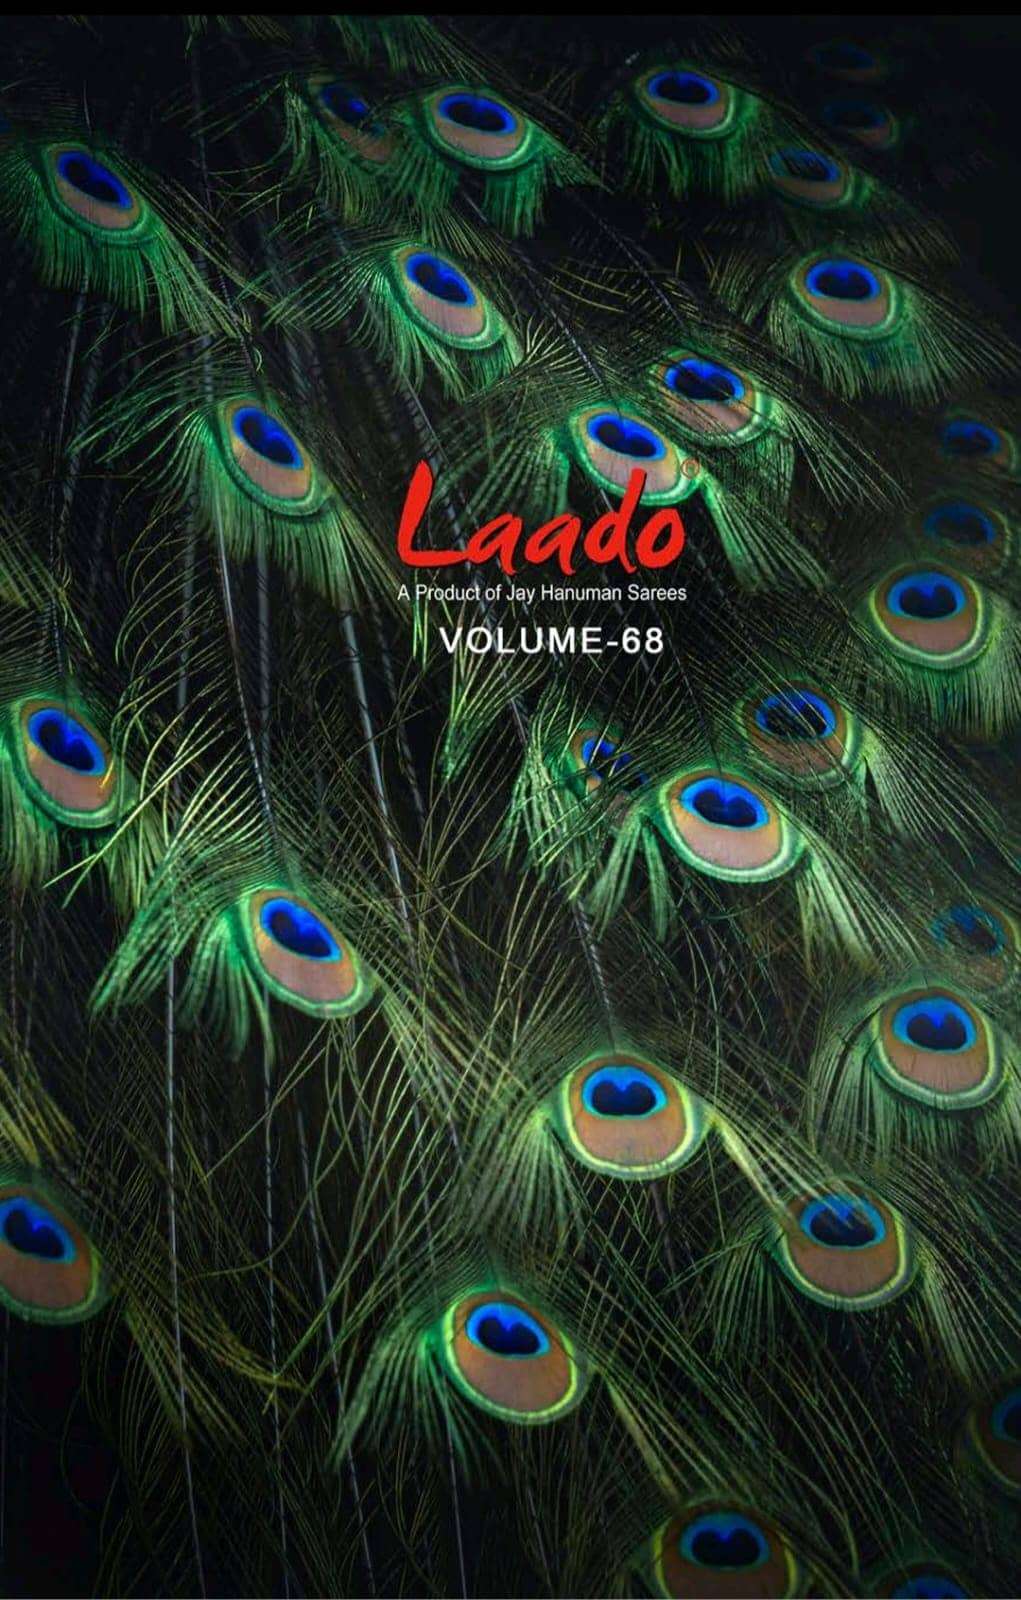 Laado Vol 68 Printed Daily Wear Cotton Dress Material Catalog Dealer